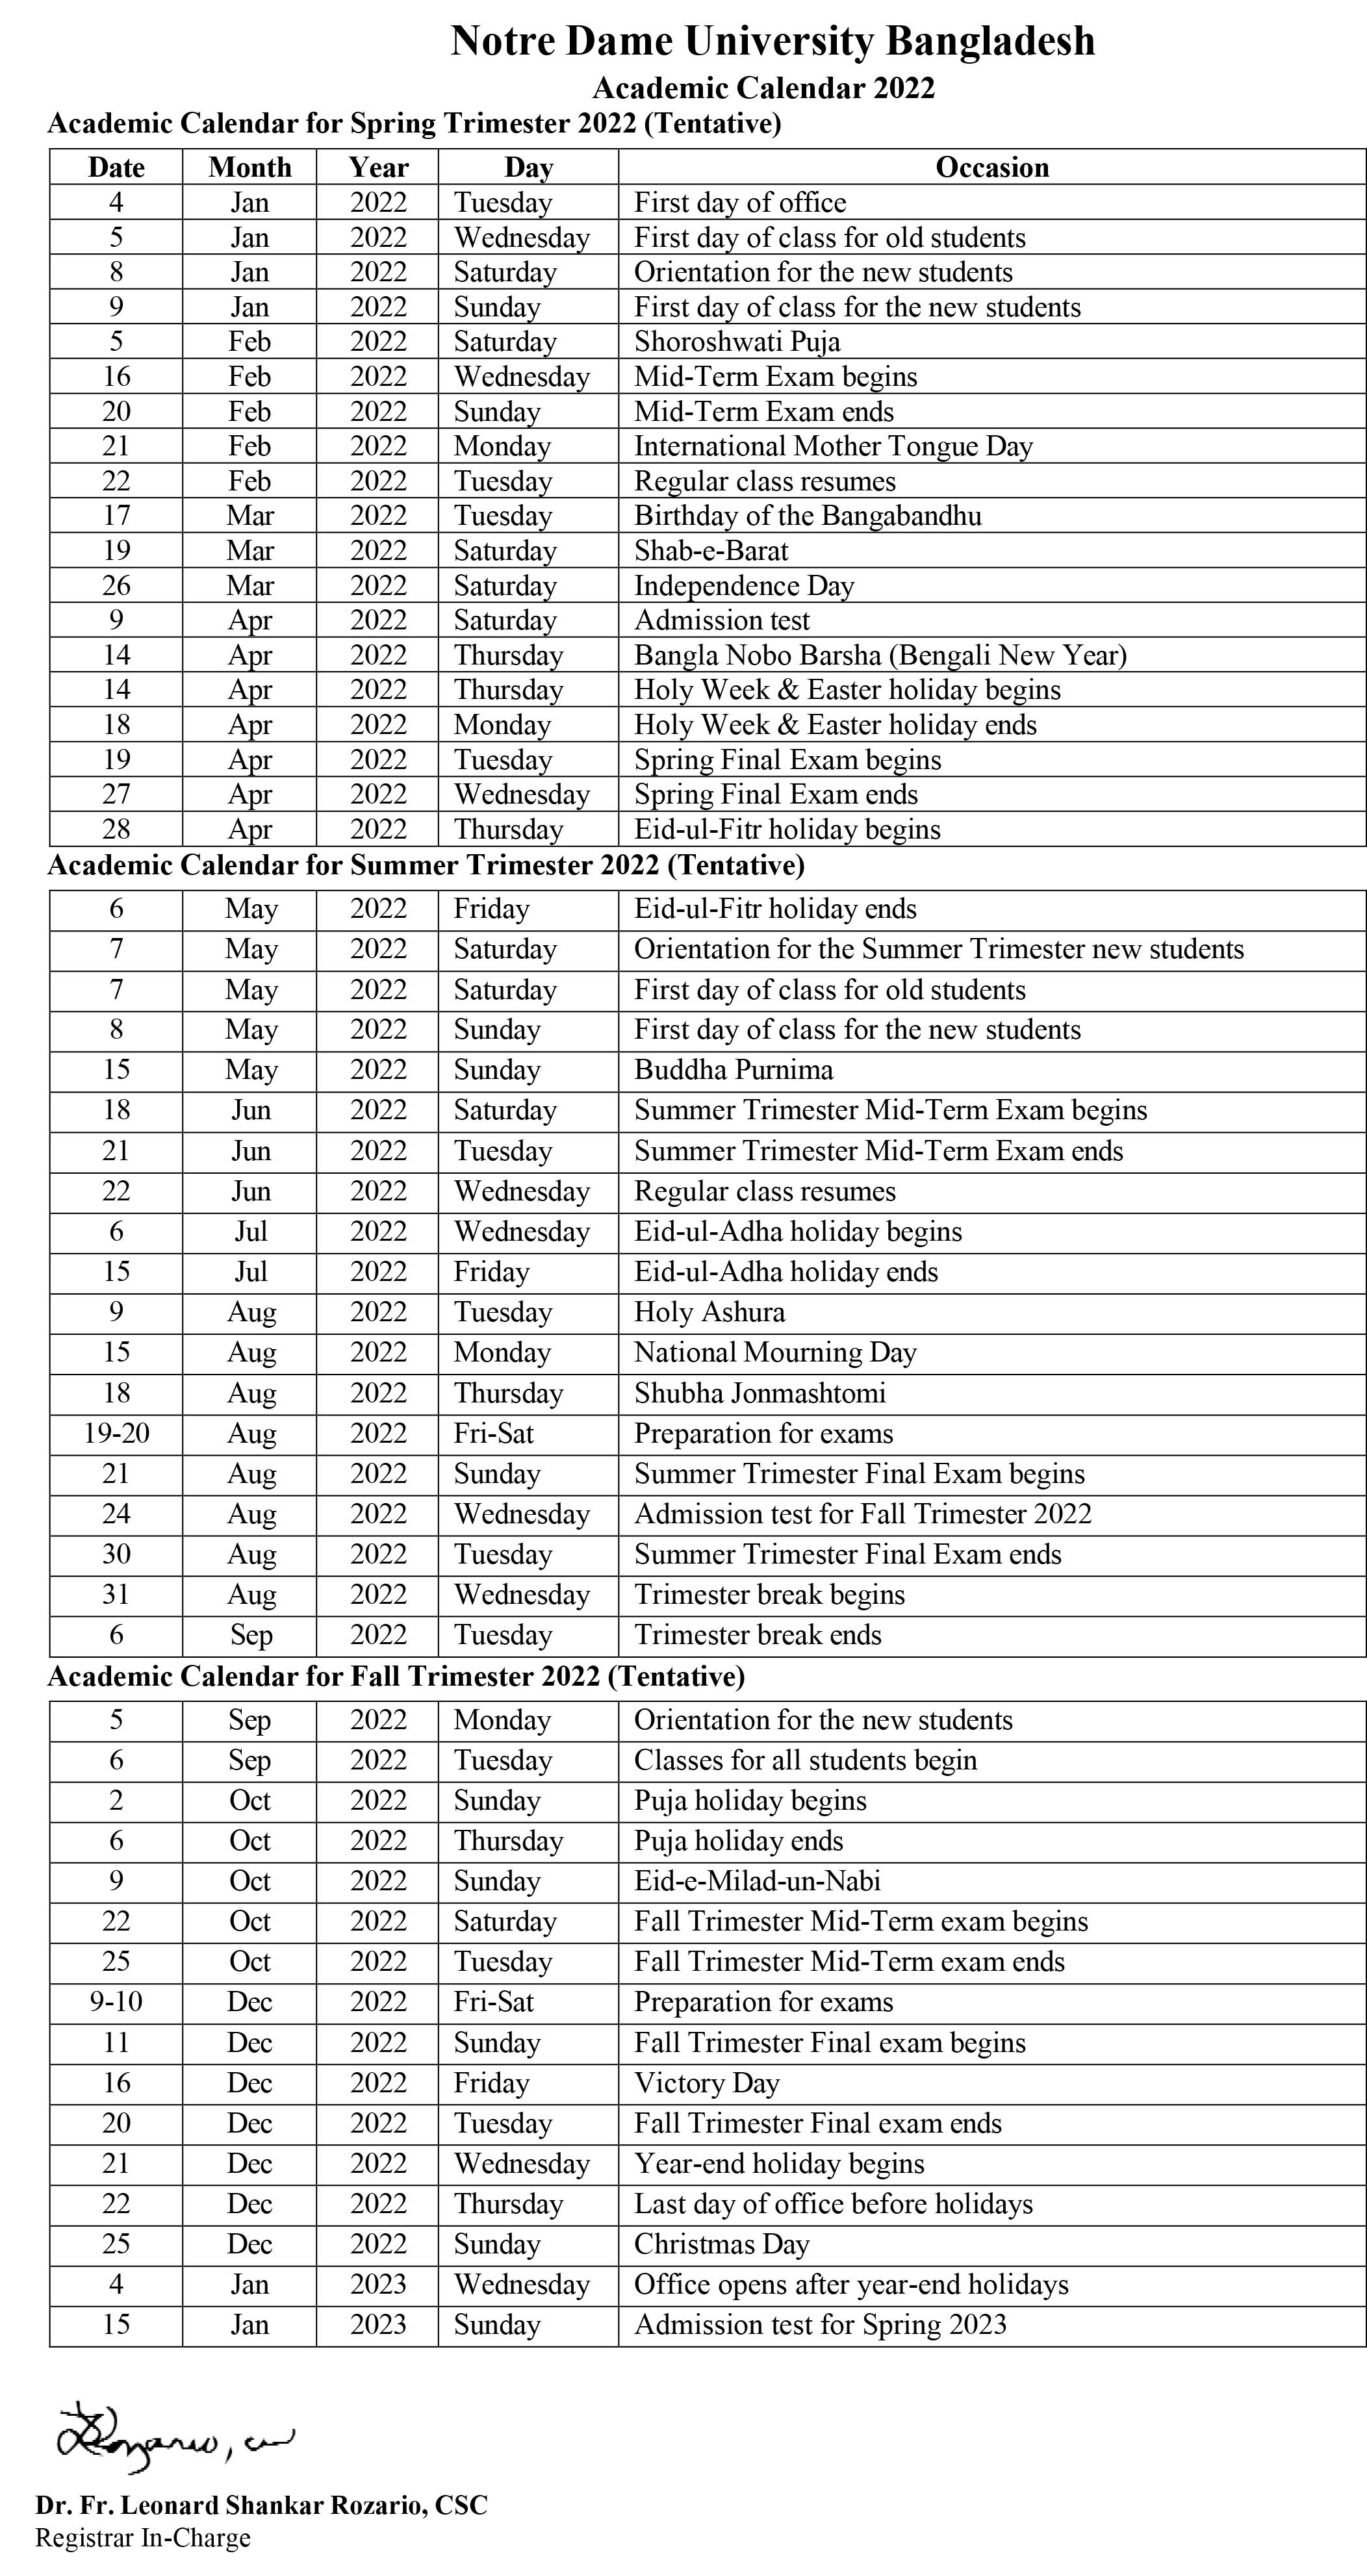 Tentative Academic Calendar, Fall2022 Notre Dame University Bangladesh